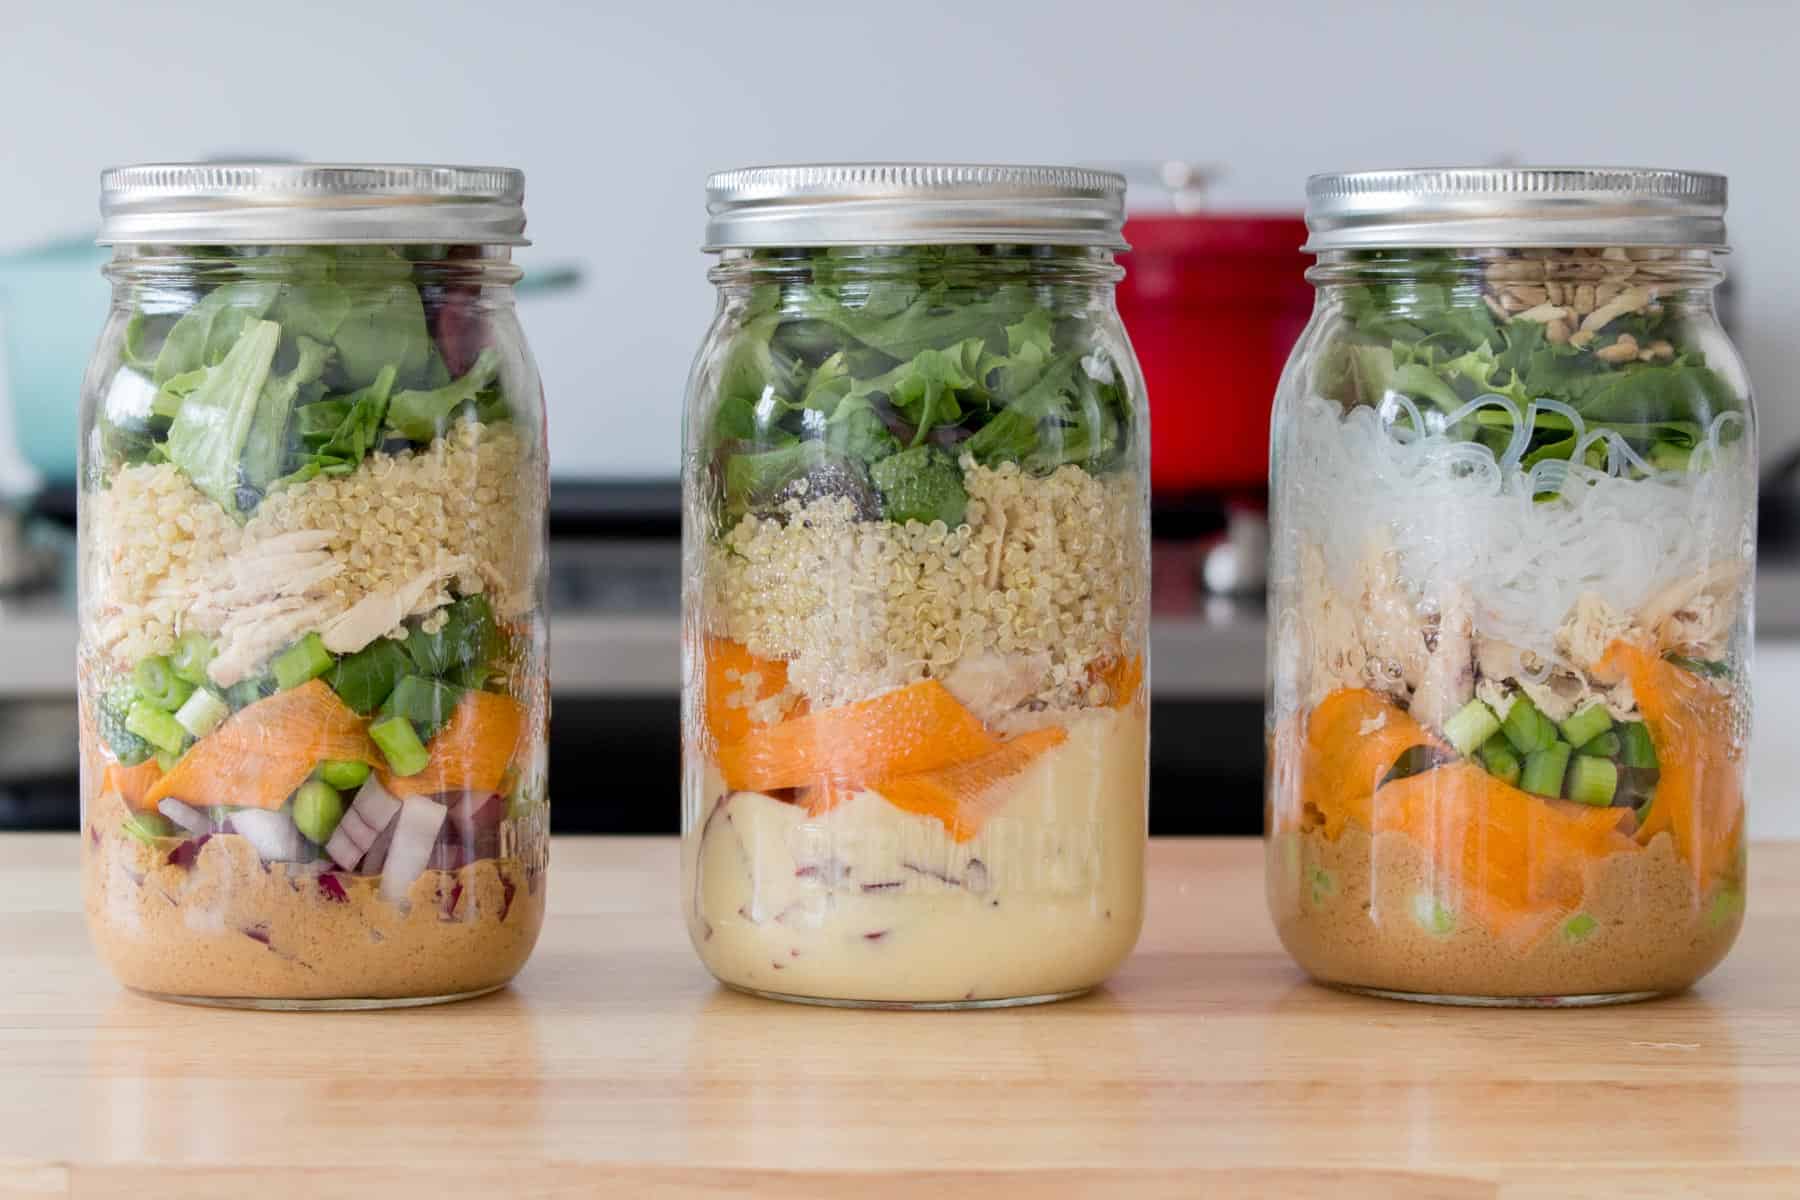 https://carmyy.com/wp-content/uploads/2020/09/mason-jar-salads-3-ways-10.jpg